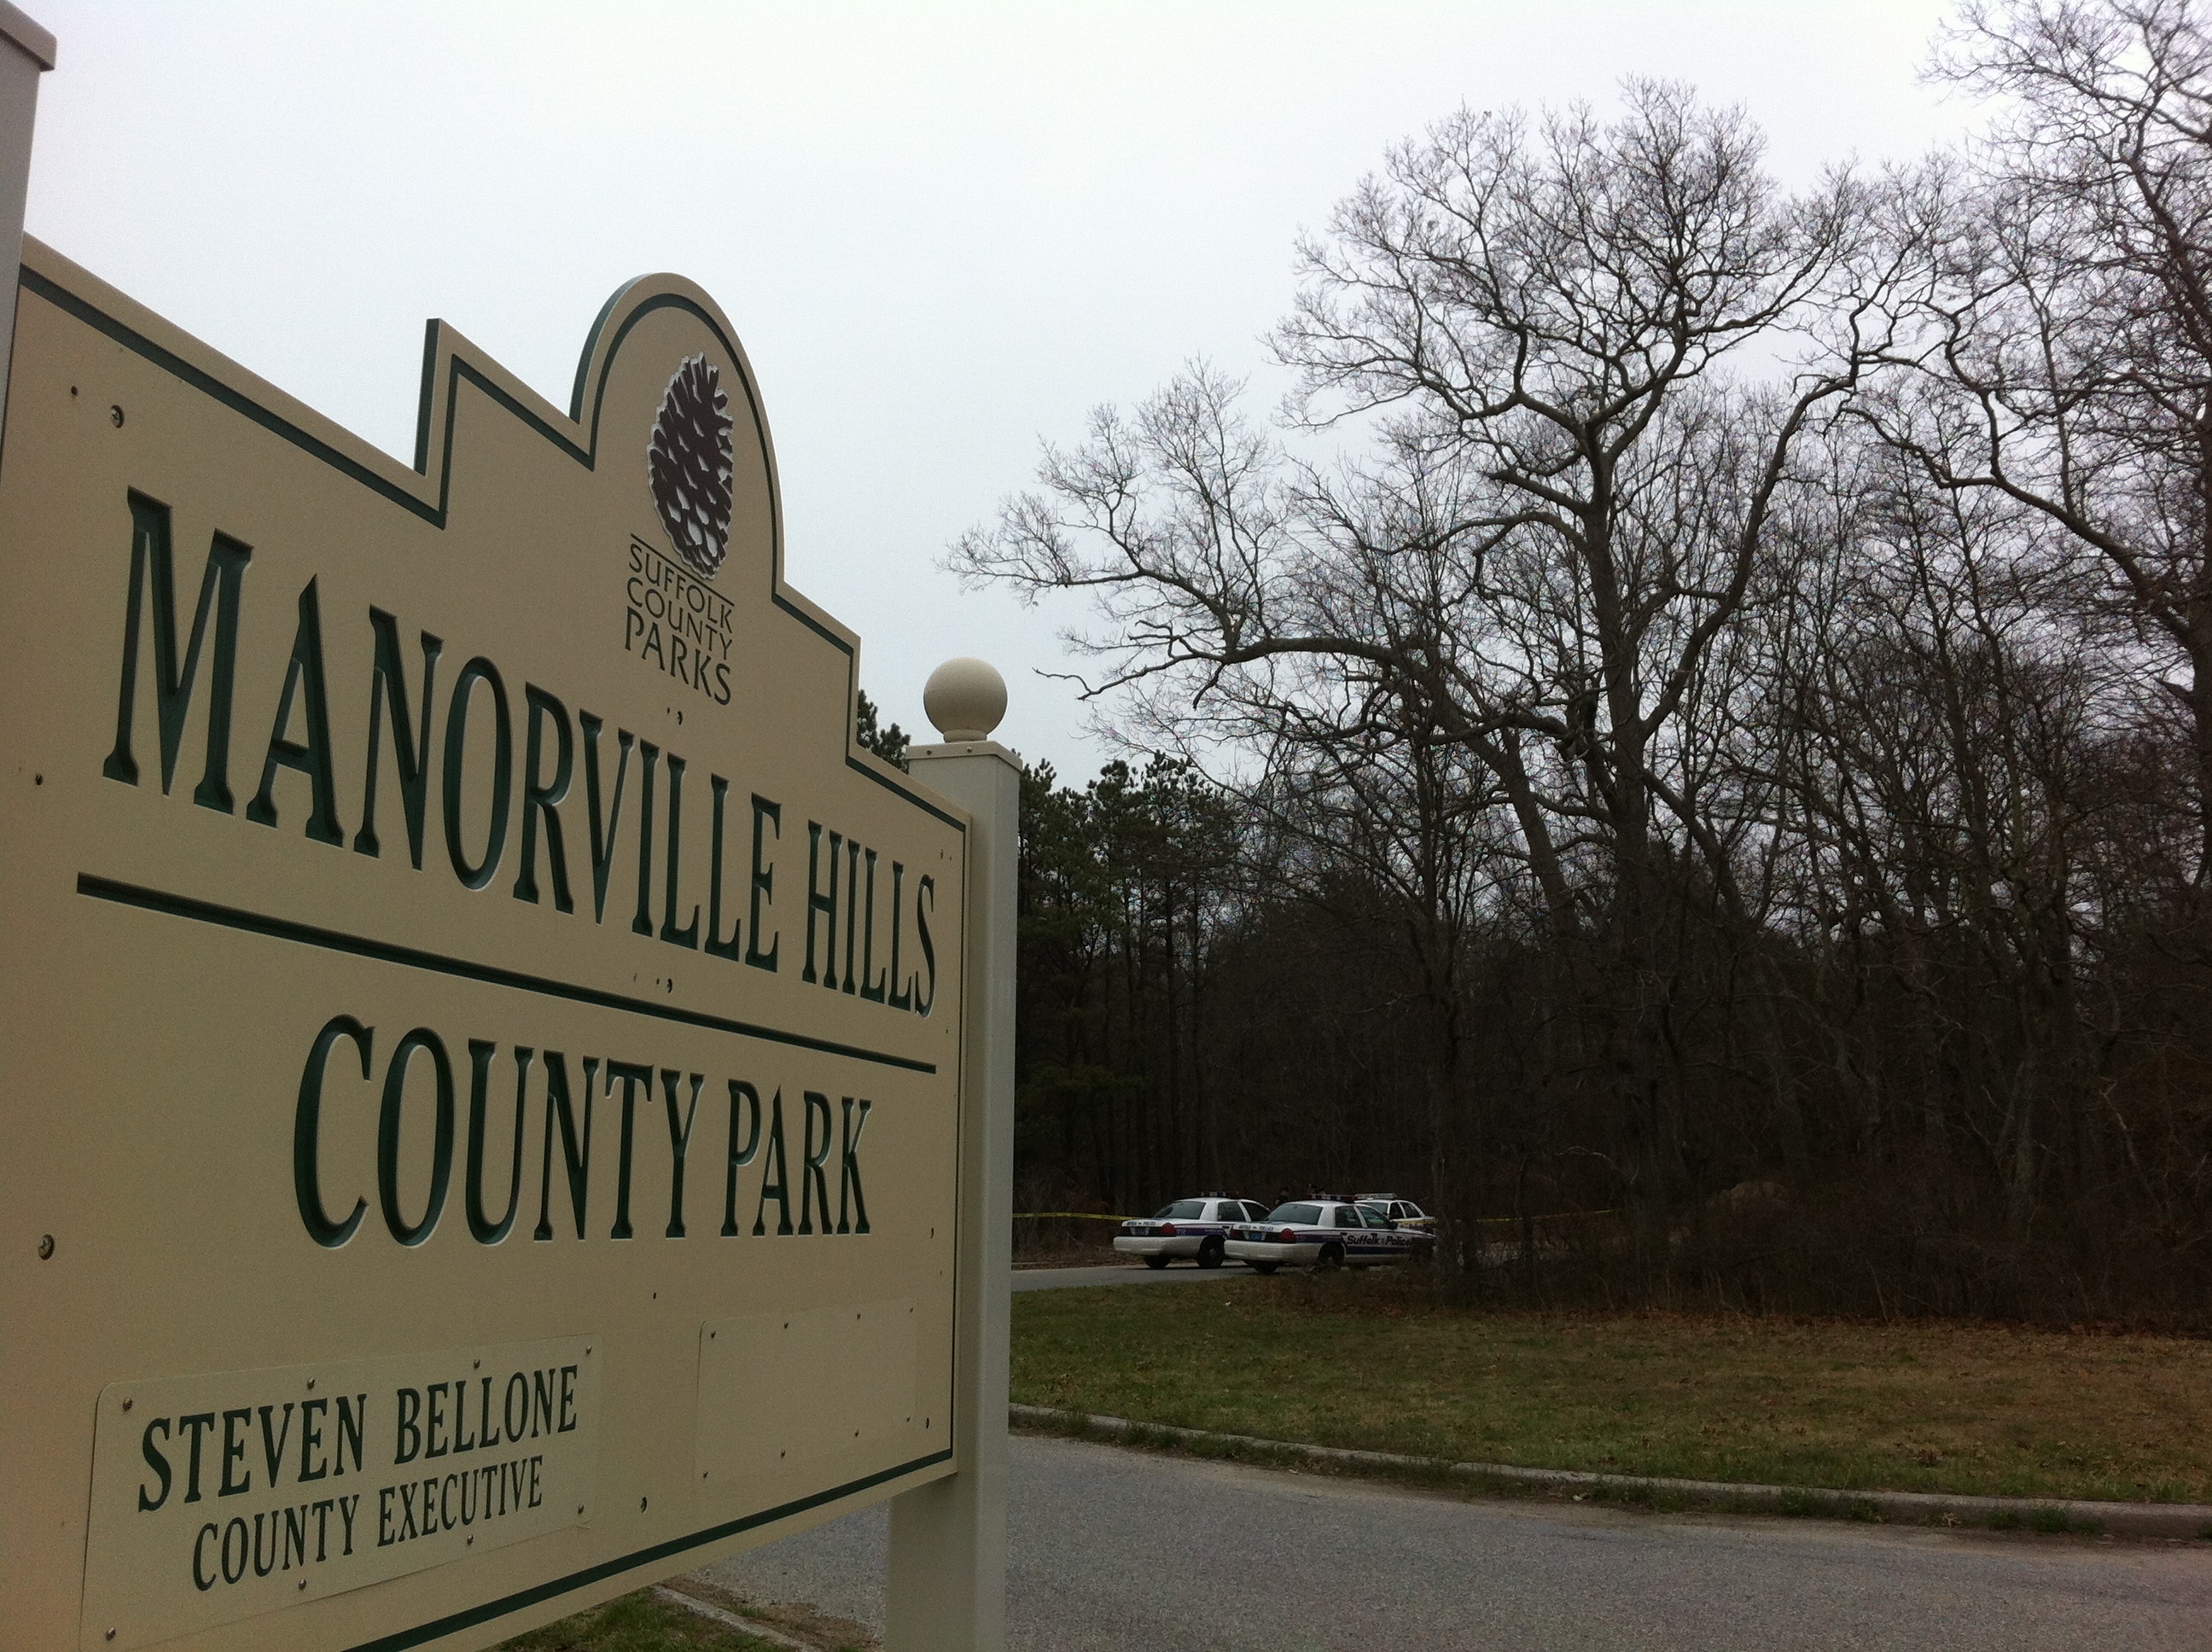 Manorville Hills County Park